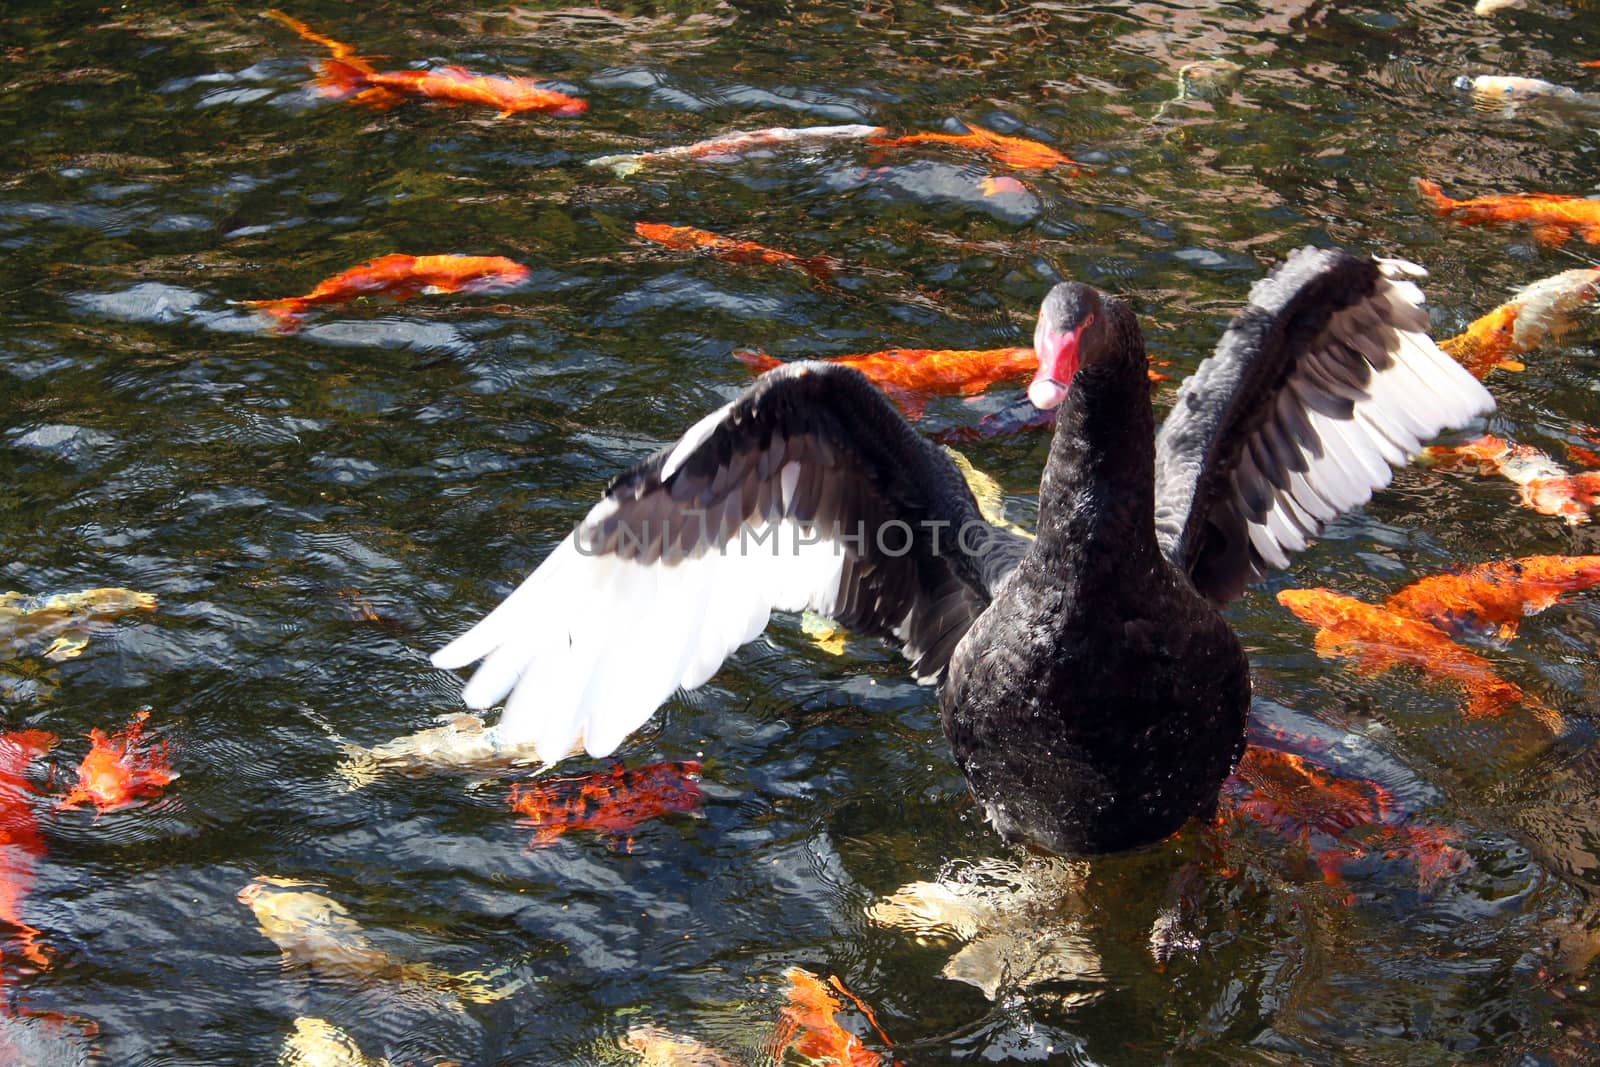 Several koi fishes swim around a black swan by hibrida13